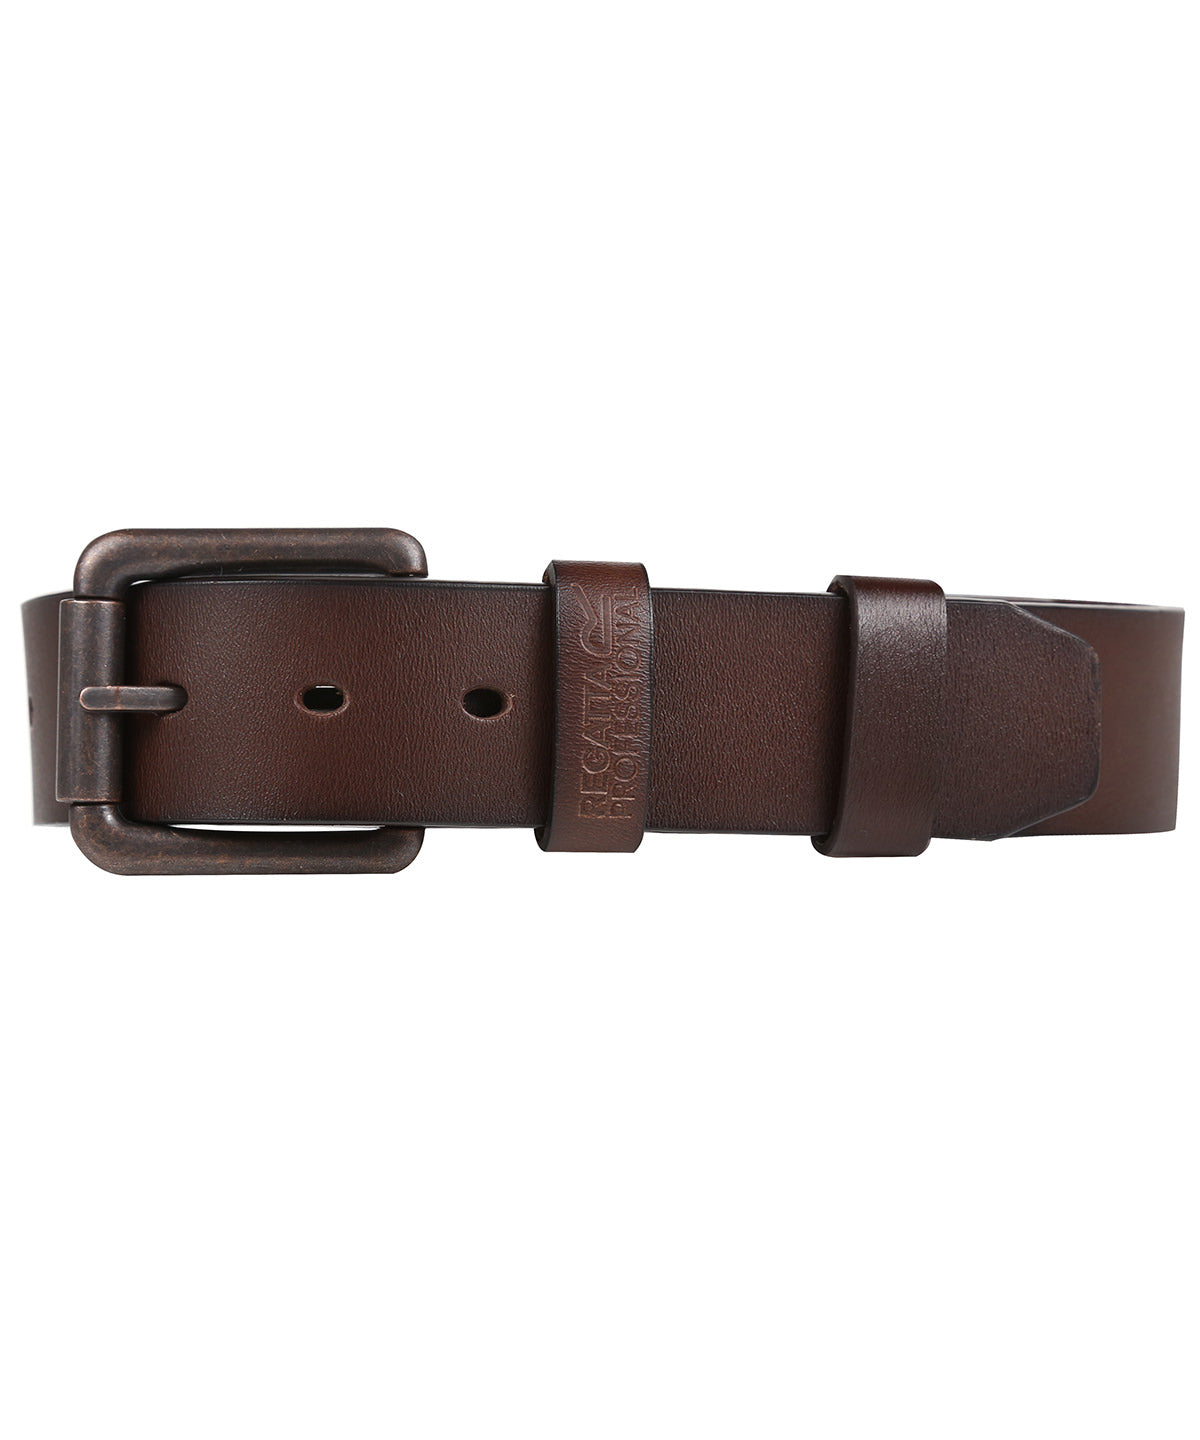 Regatta Pro leather work belt